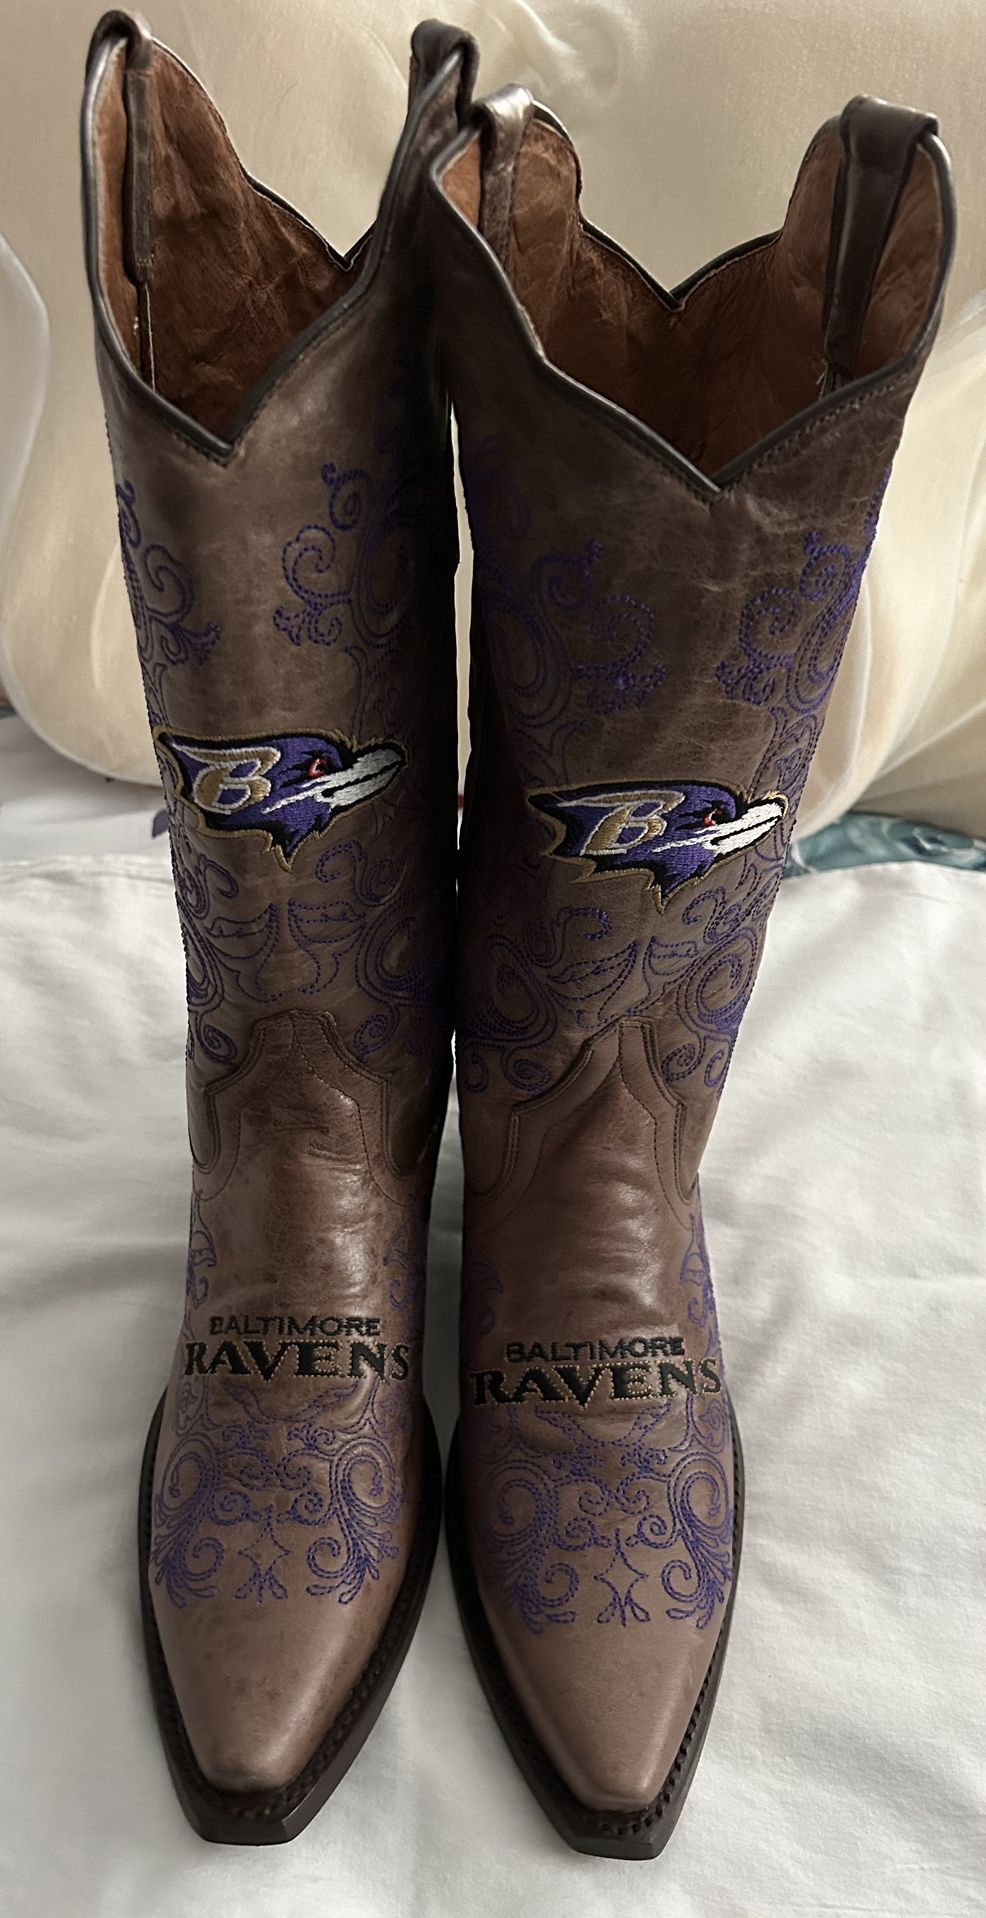   NFL Baltimore Ravens Boots 